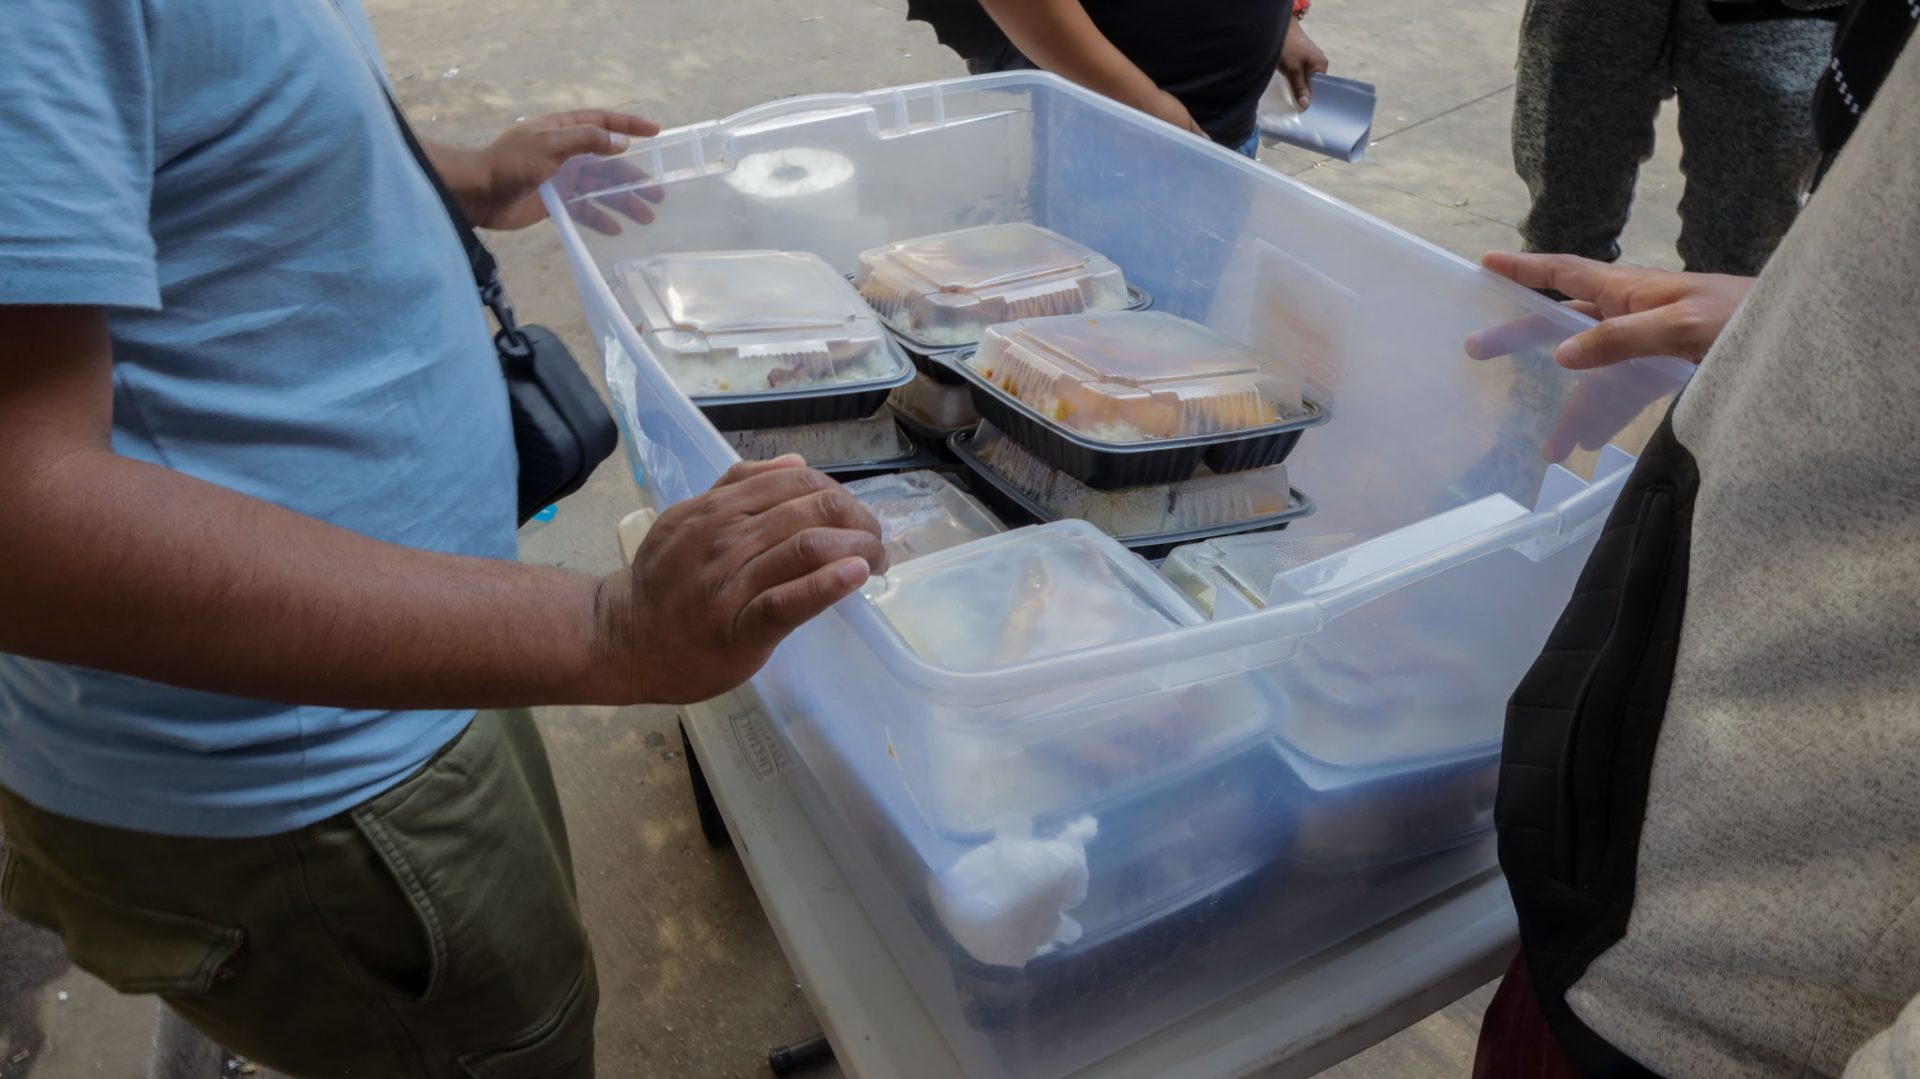 Venezuelan migrants selling food in downtown Chicago.